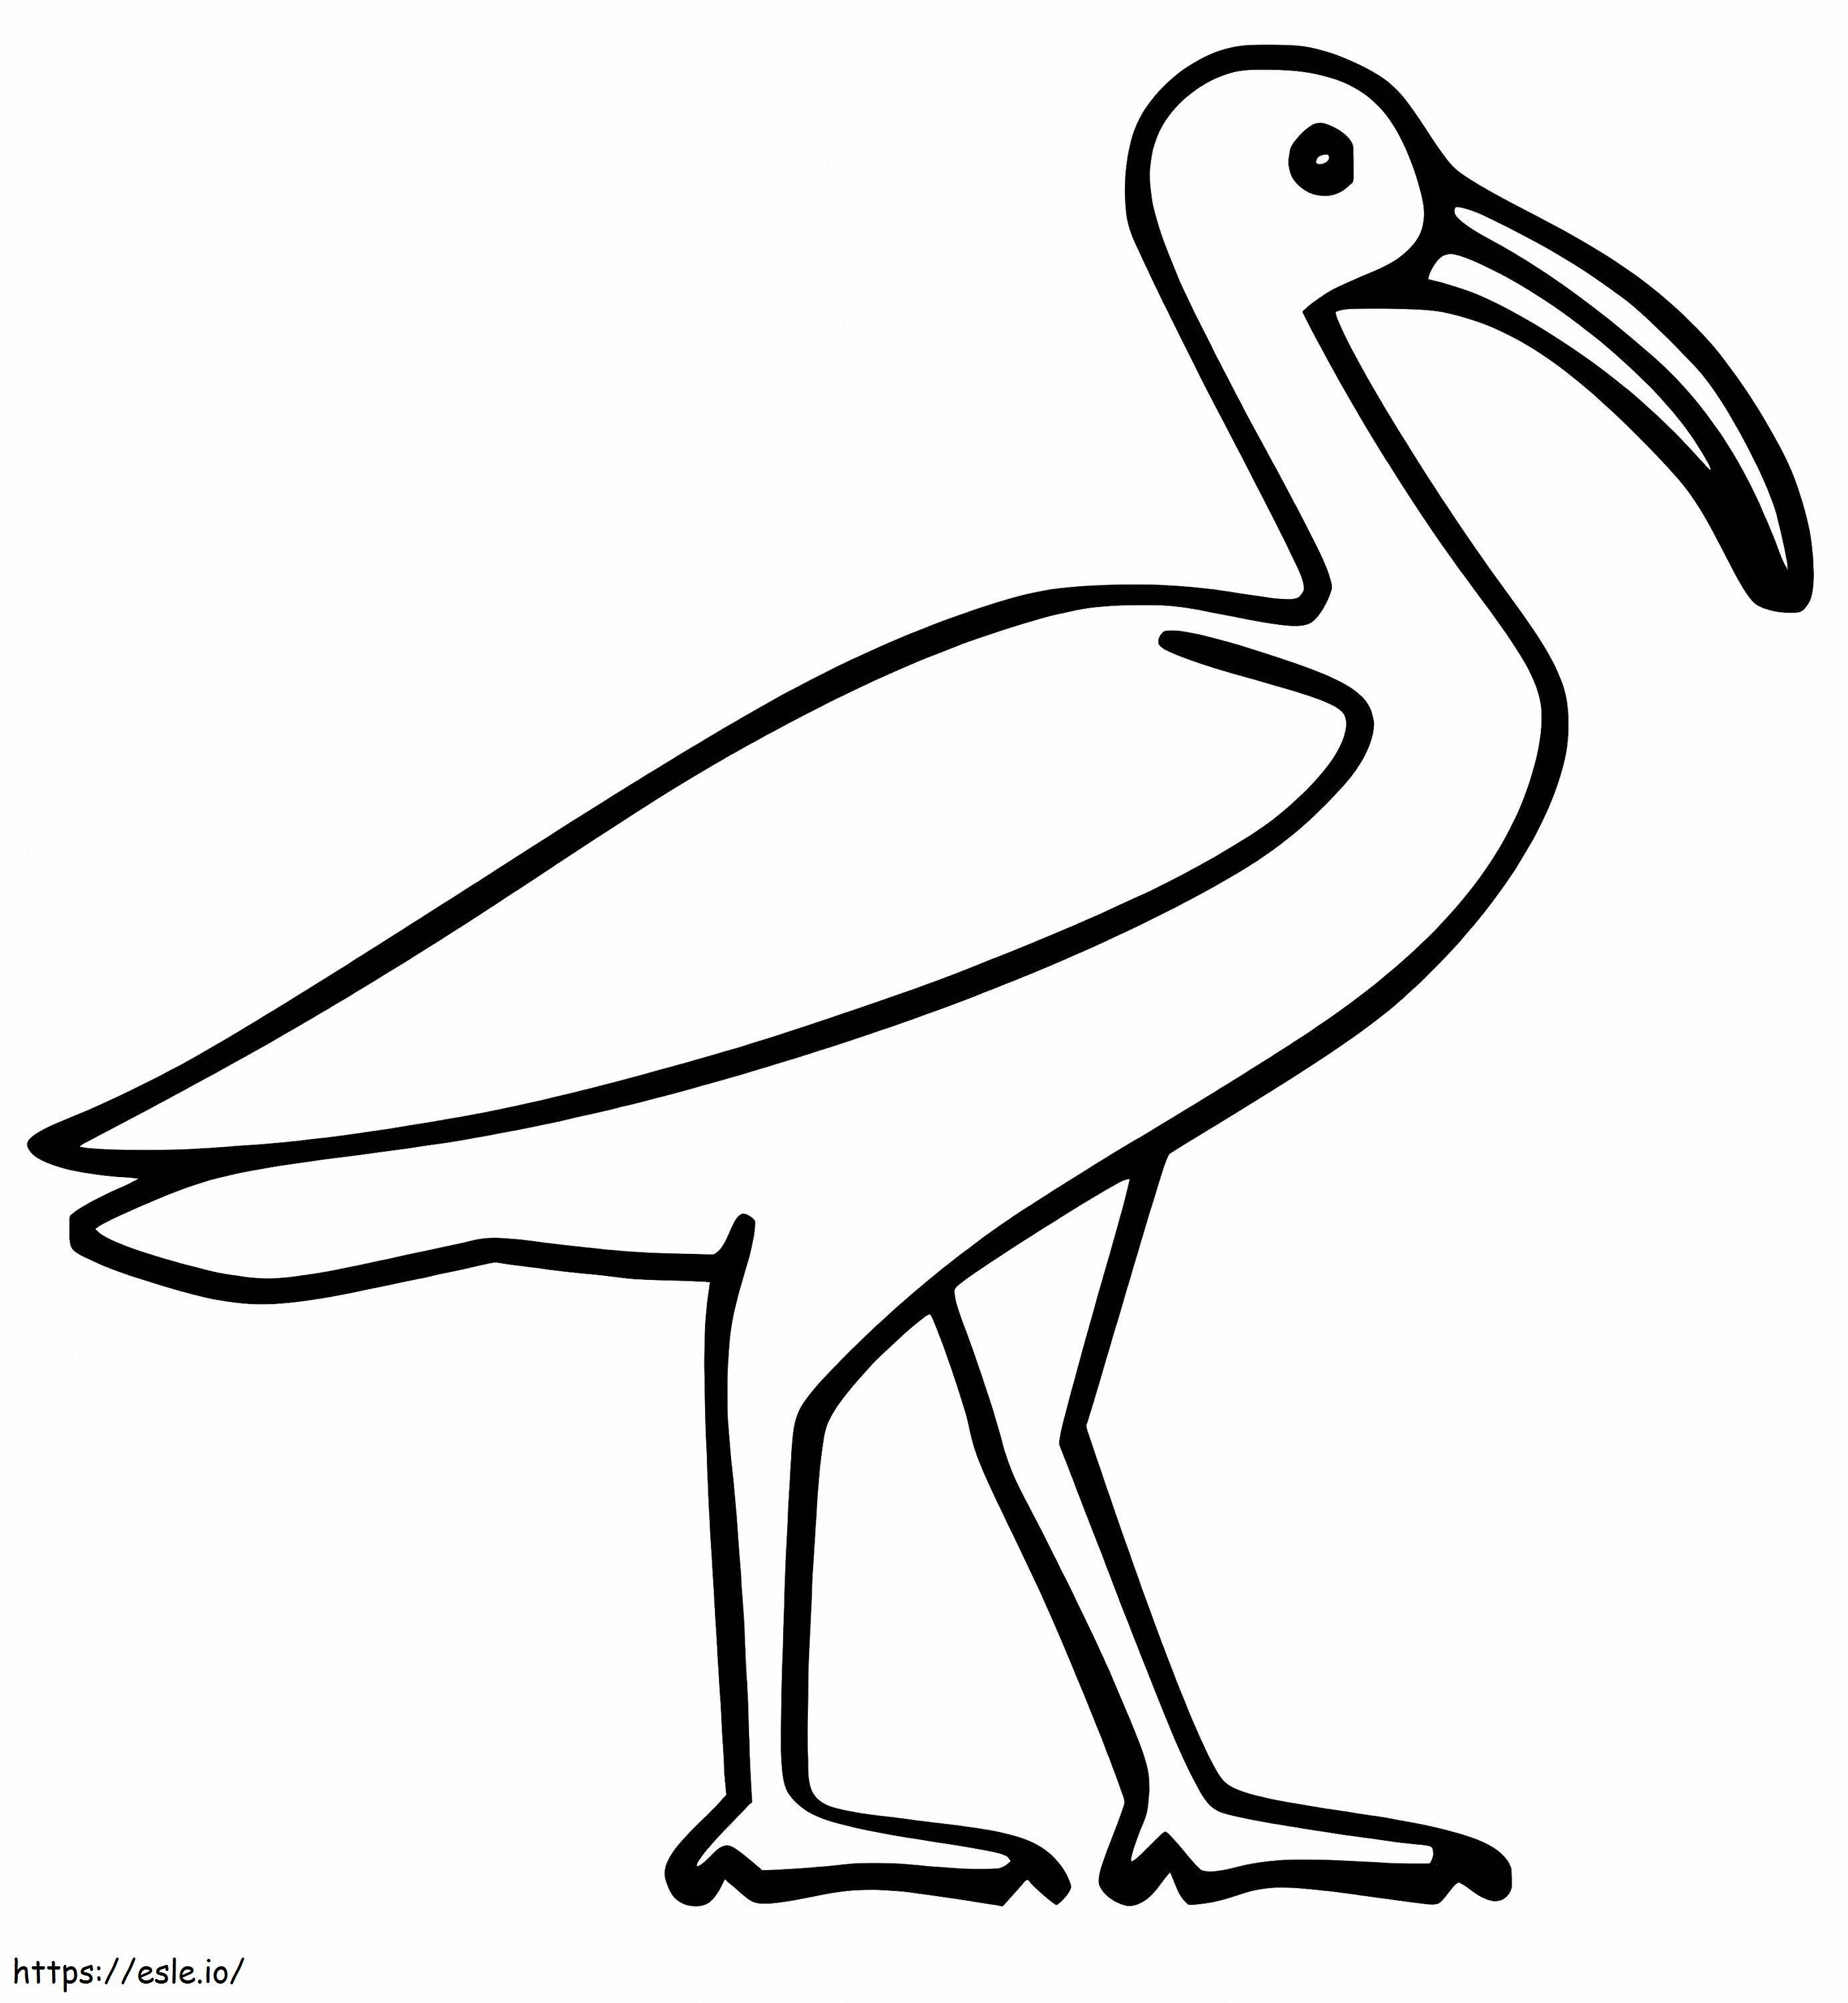 Coloriage Ibis facile à imprimer dessin